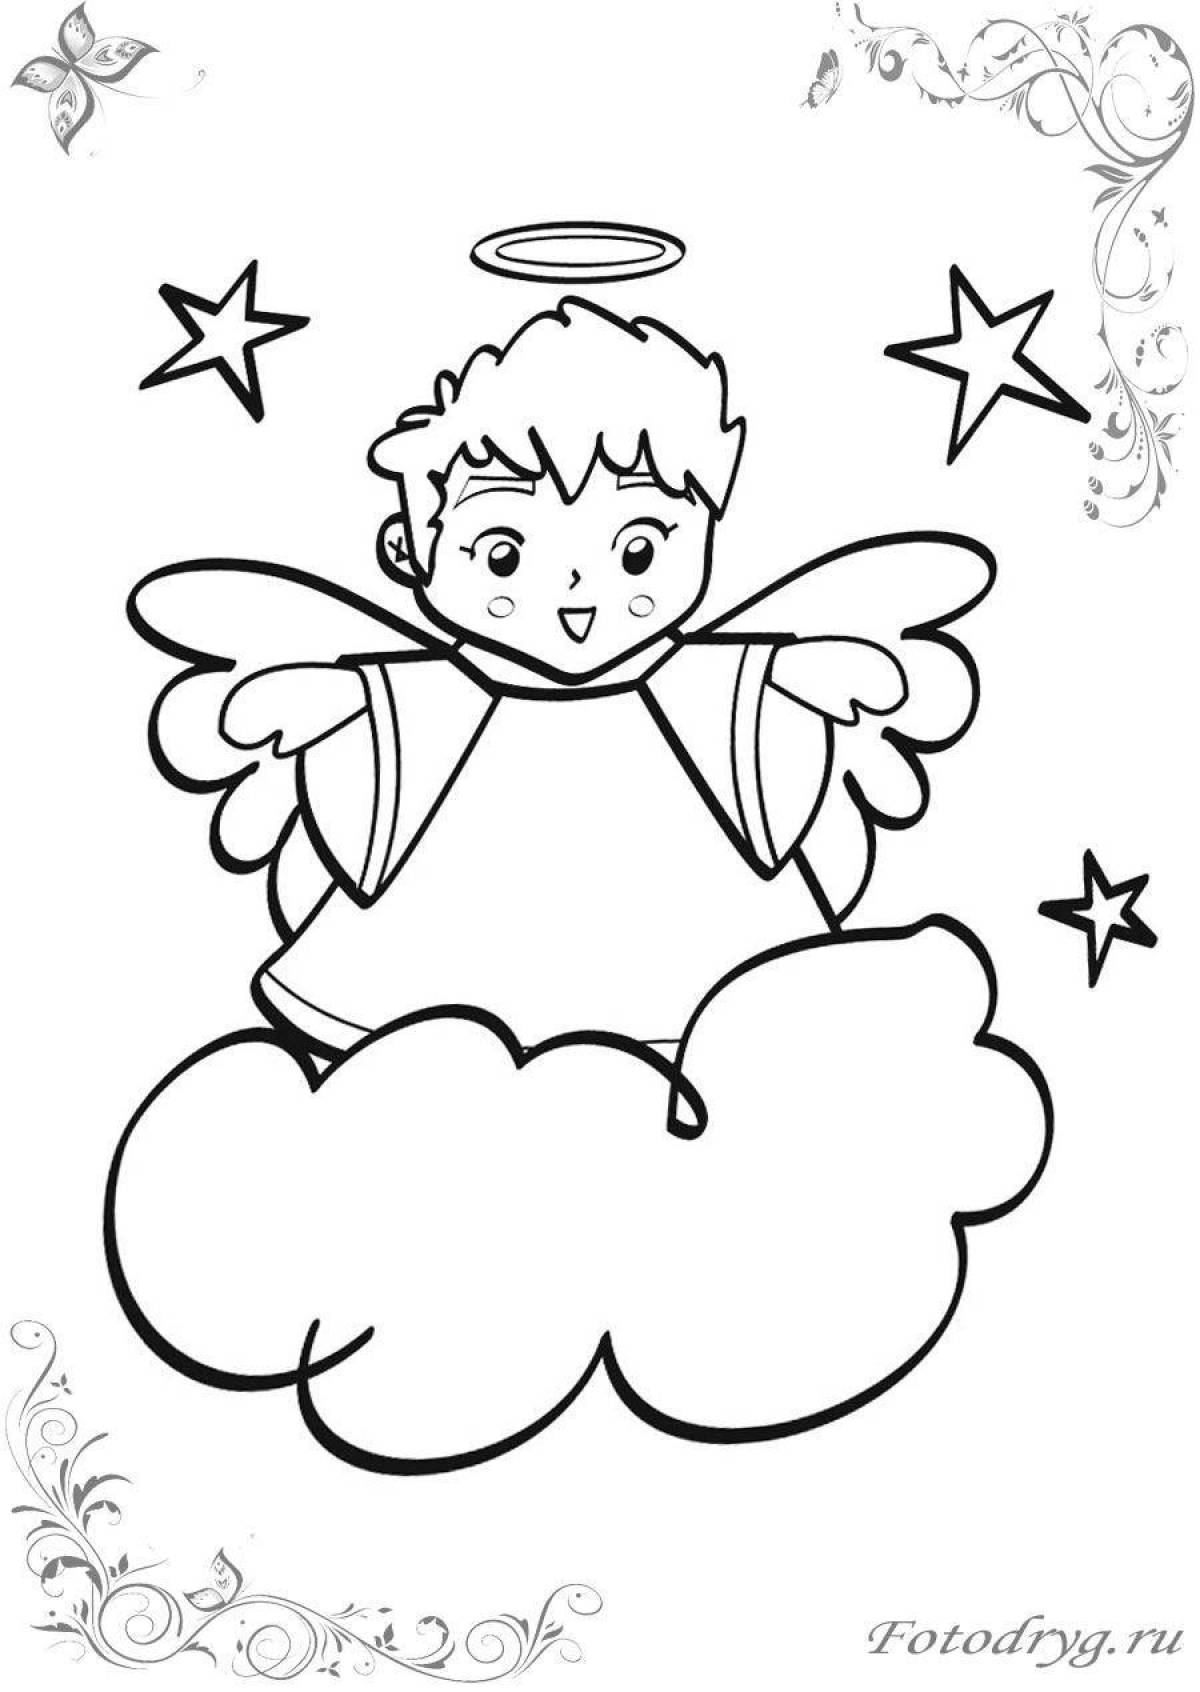 Безмятежная раскраска ангел для детей 3-4 лет